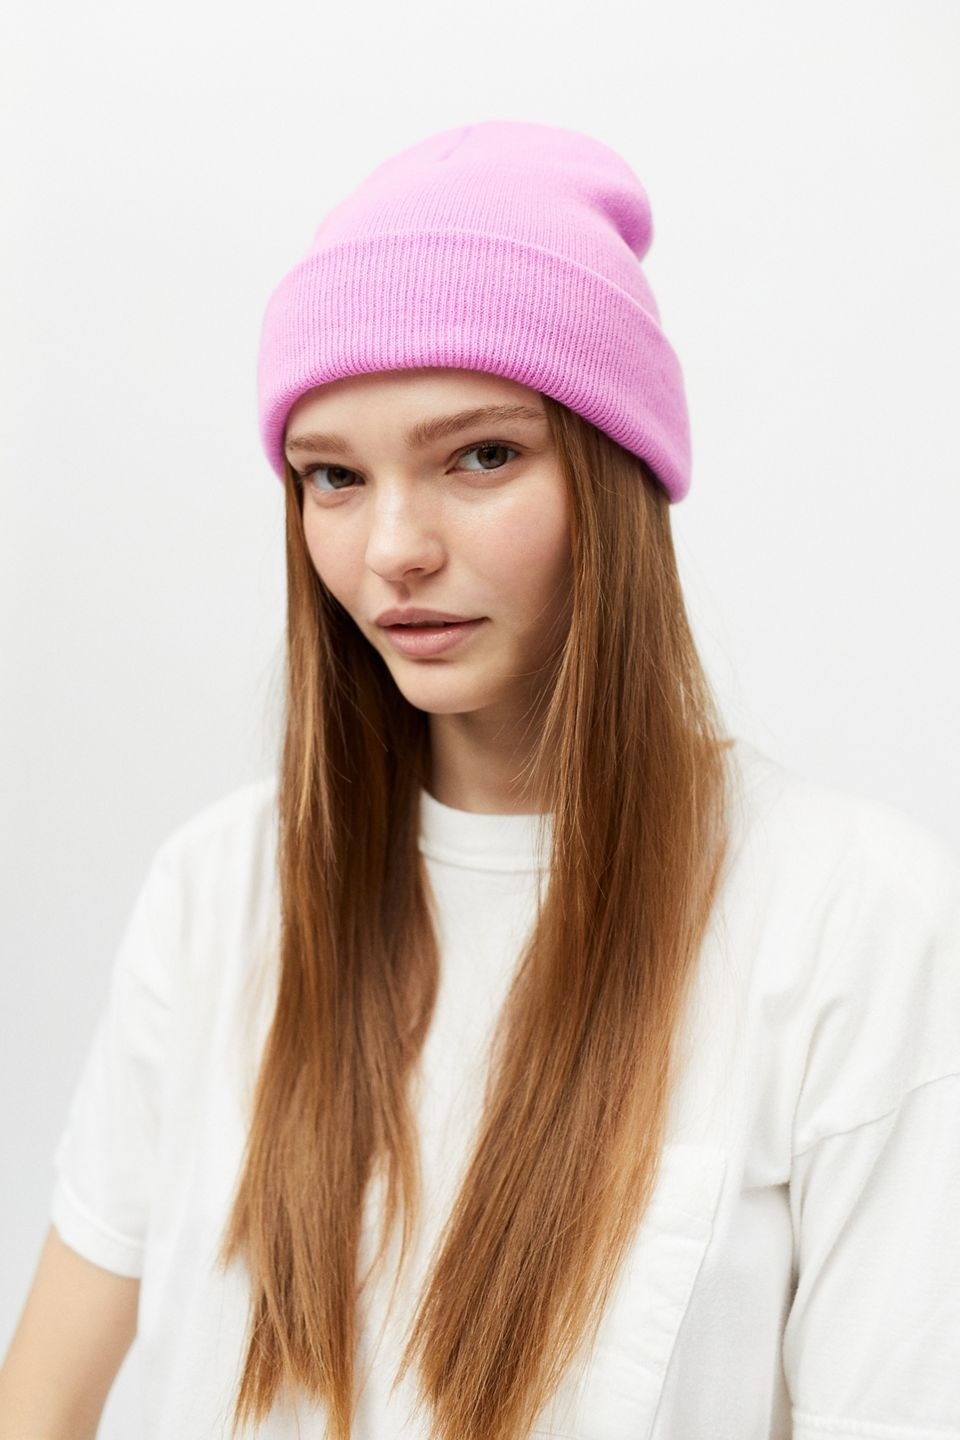 model in pink beanie